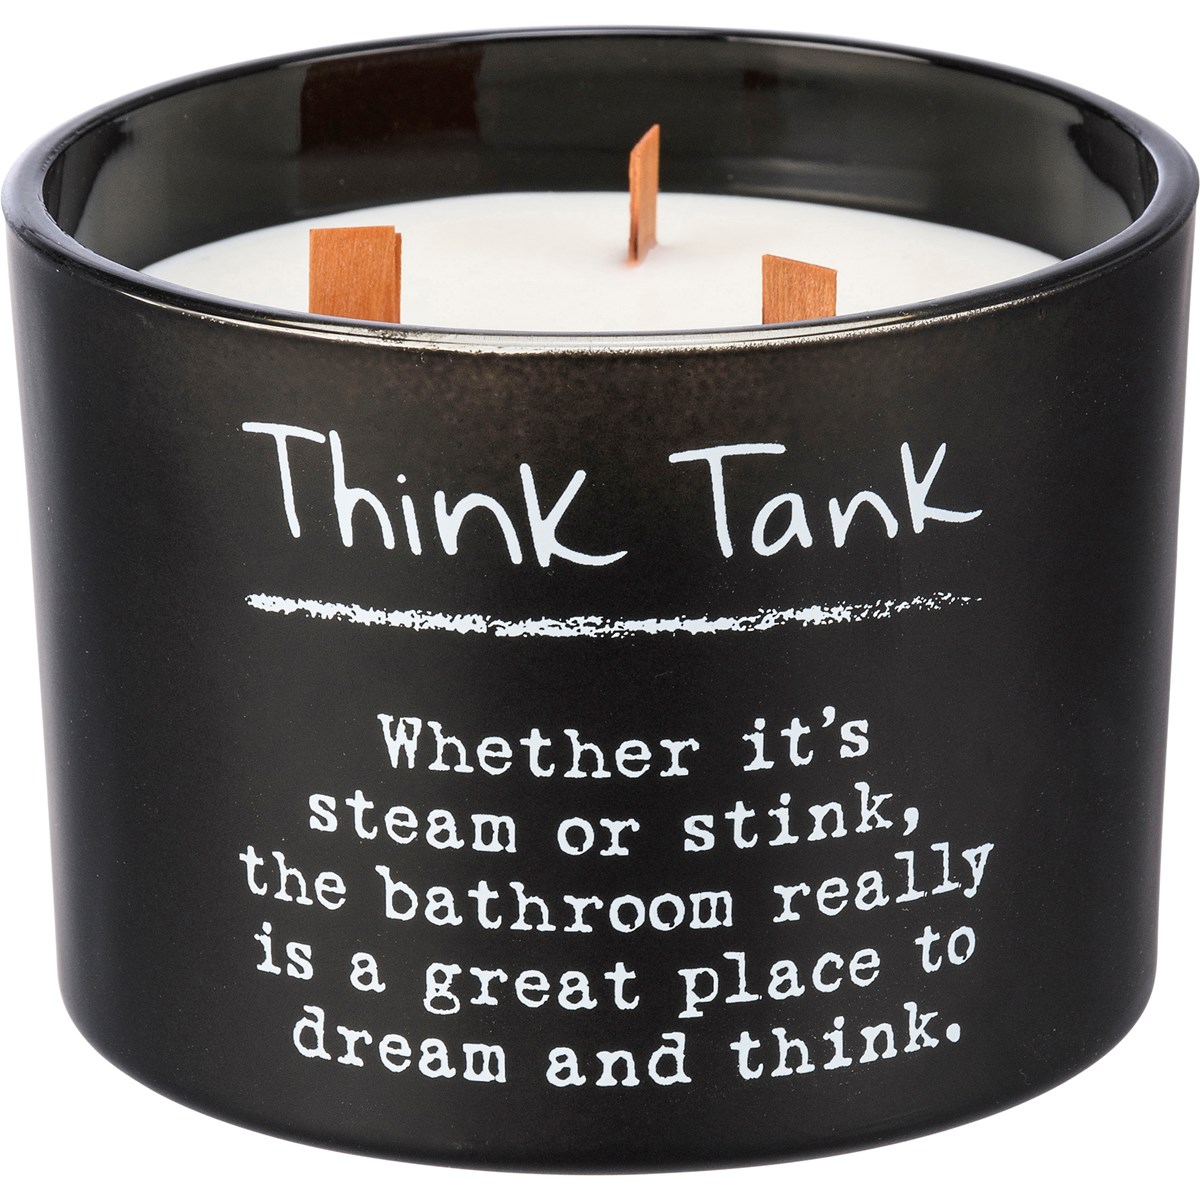 Think Tank Jar Candle - Soy Wax, Glass, Wood